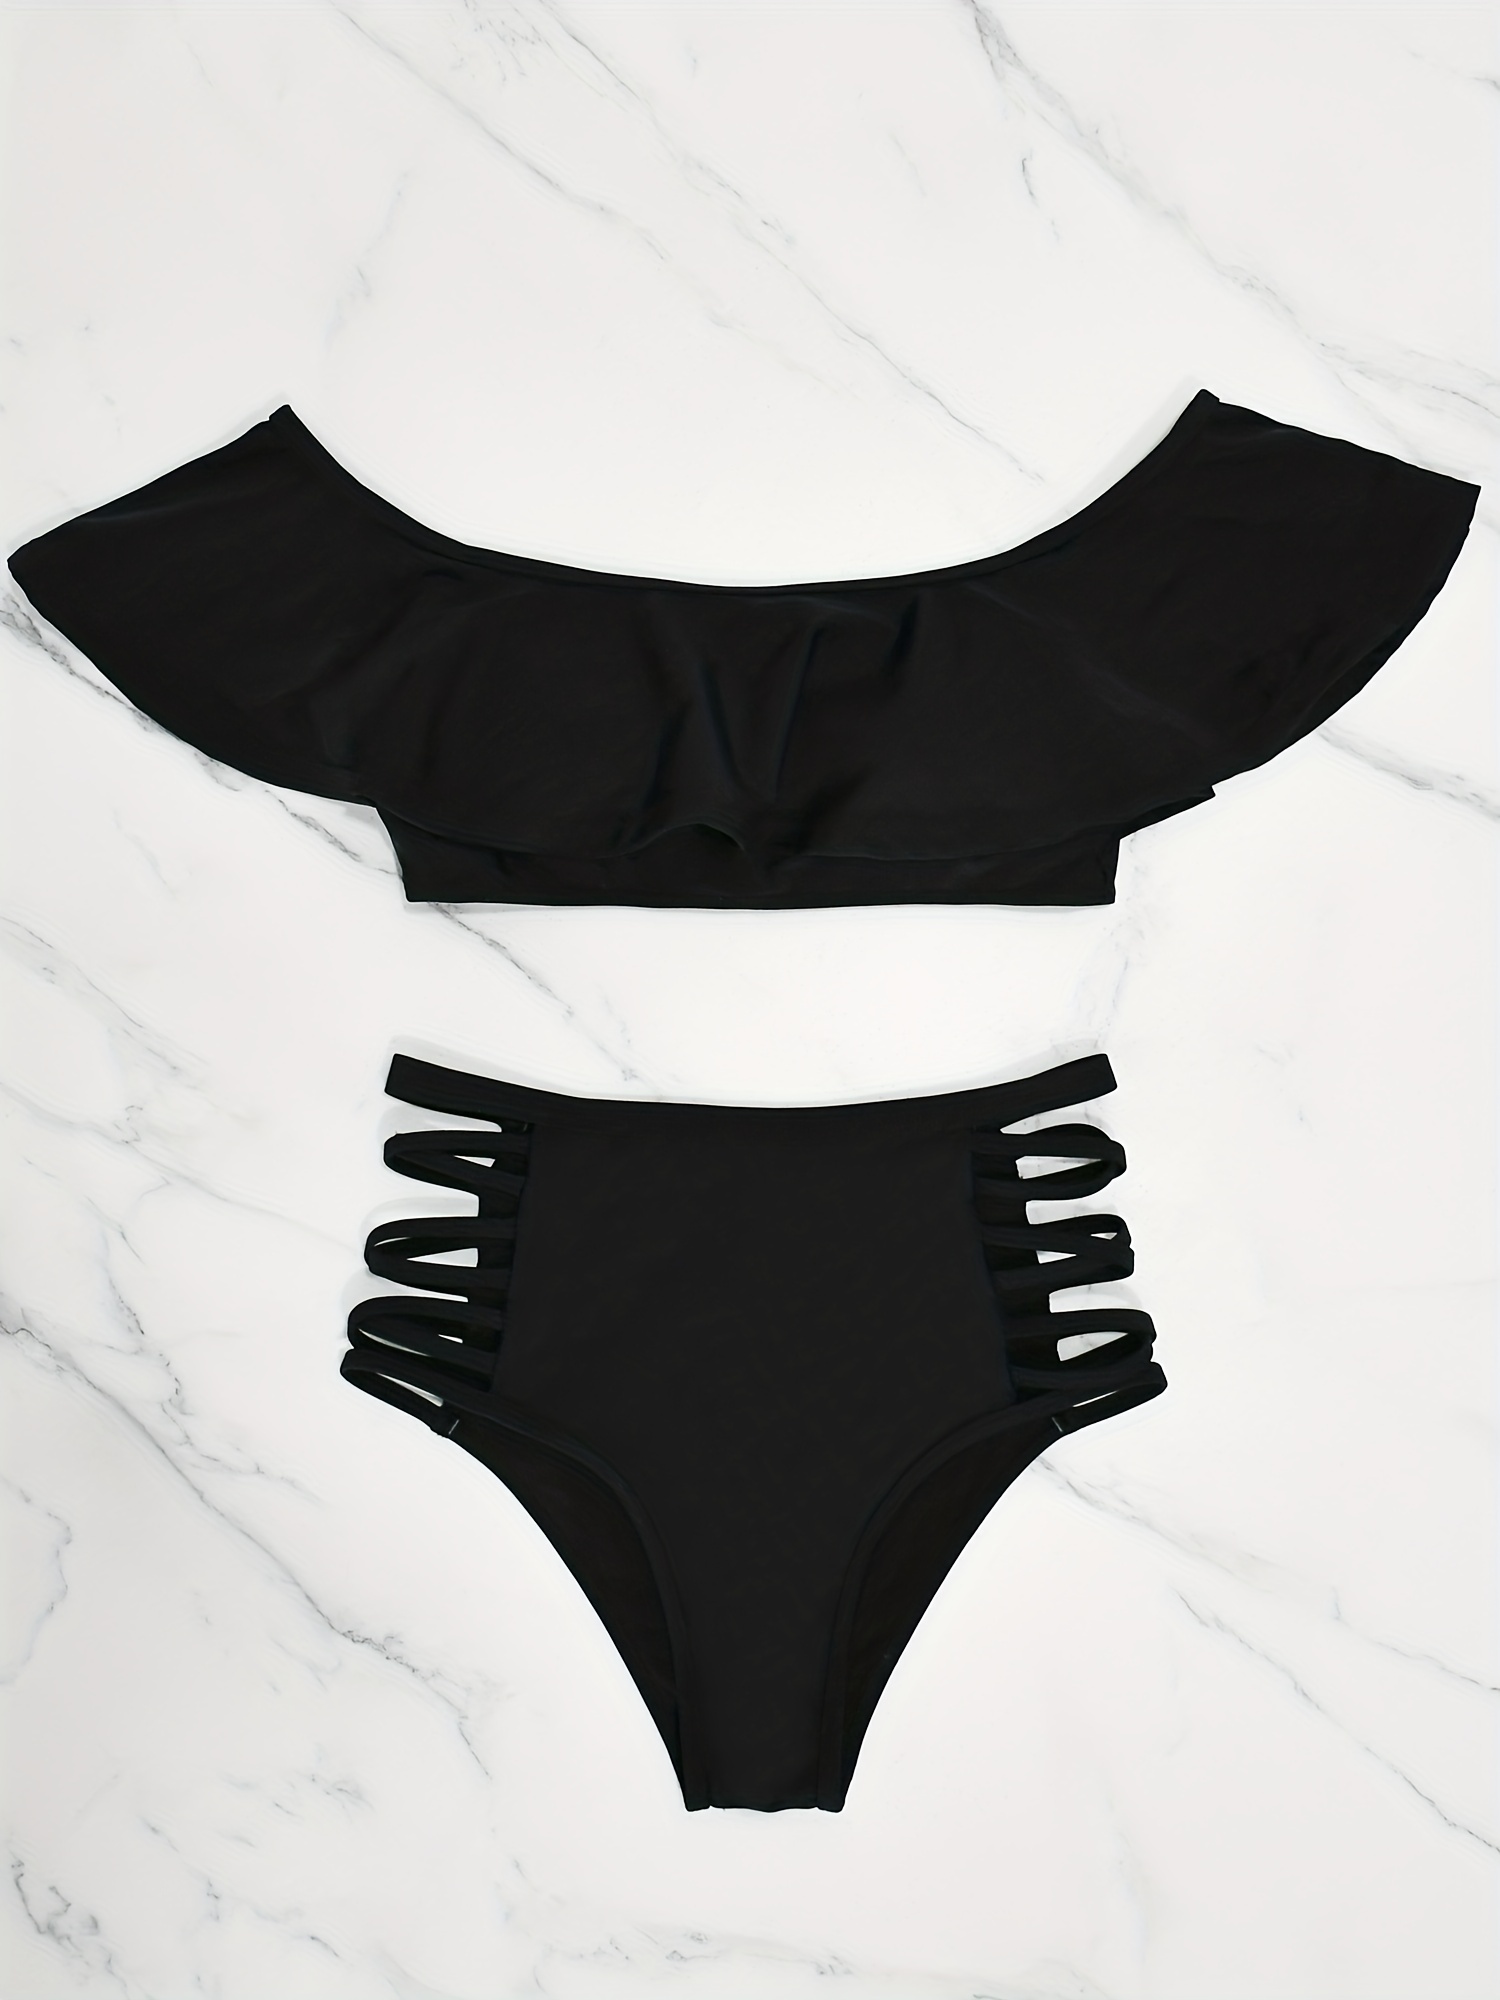 ruffle off the shoulder plain 2 piece set tankini criss cross high waist stretchy swimsuits womens swimwear clothing